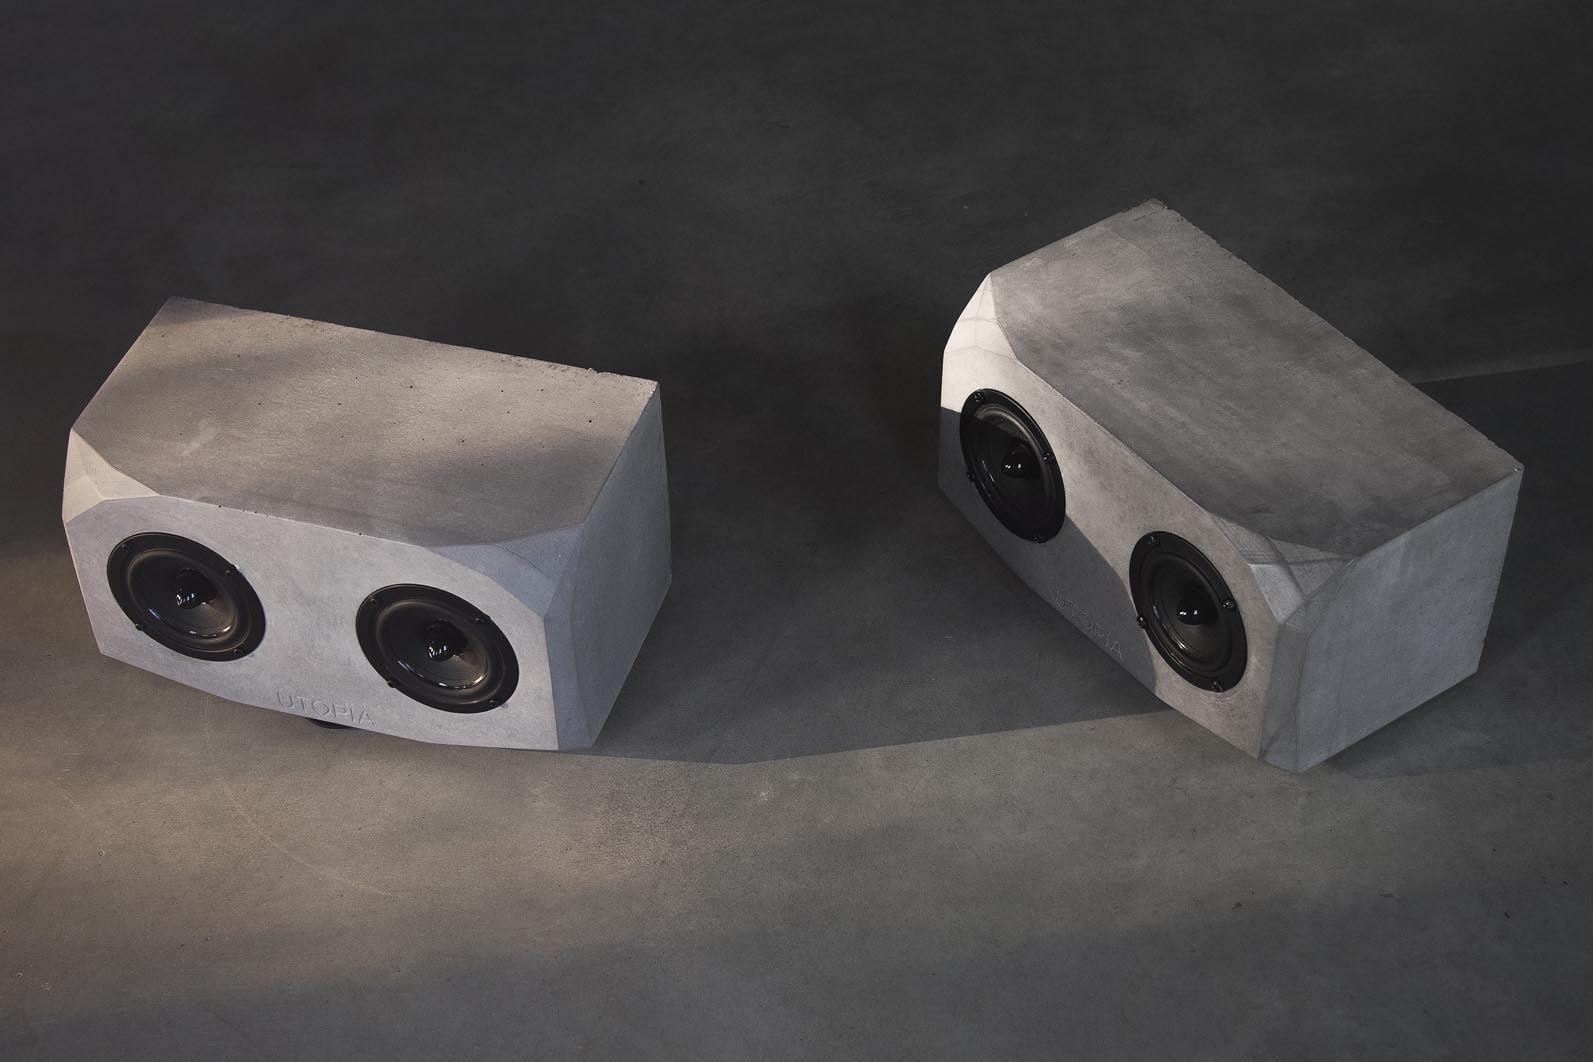 Utopia High-End Titan Brutalist Concrete Speaker